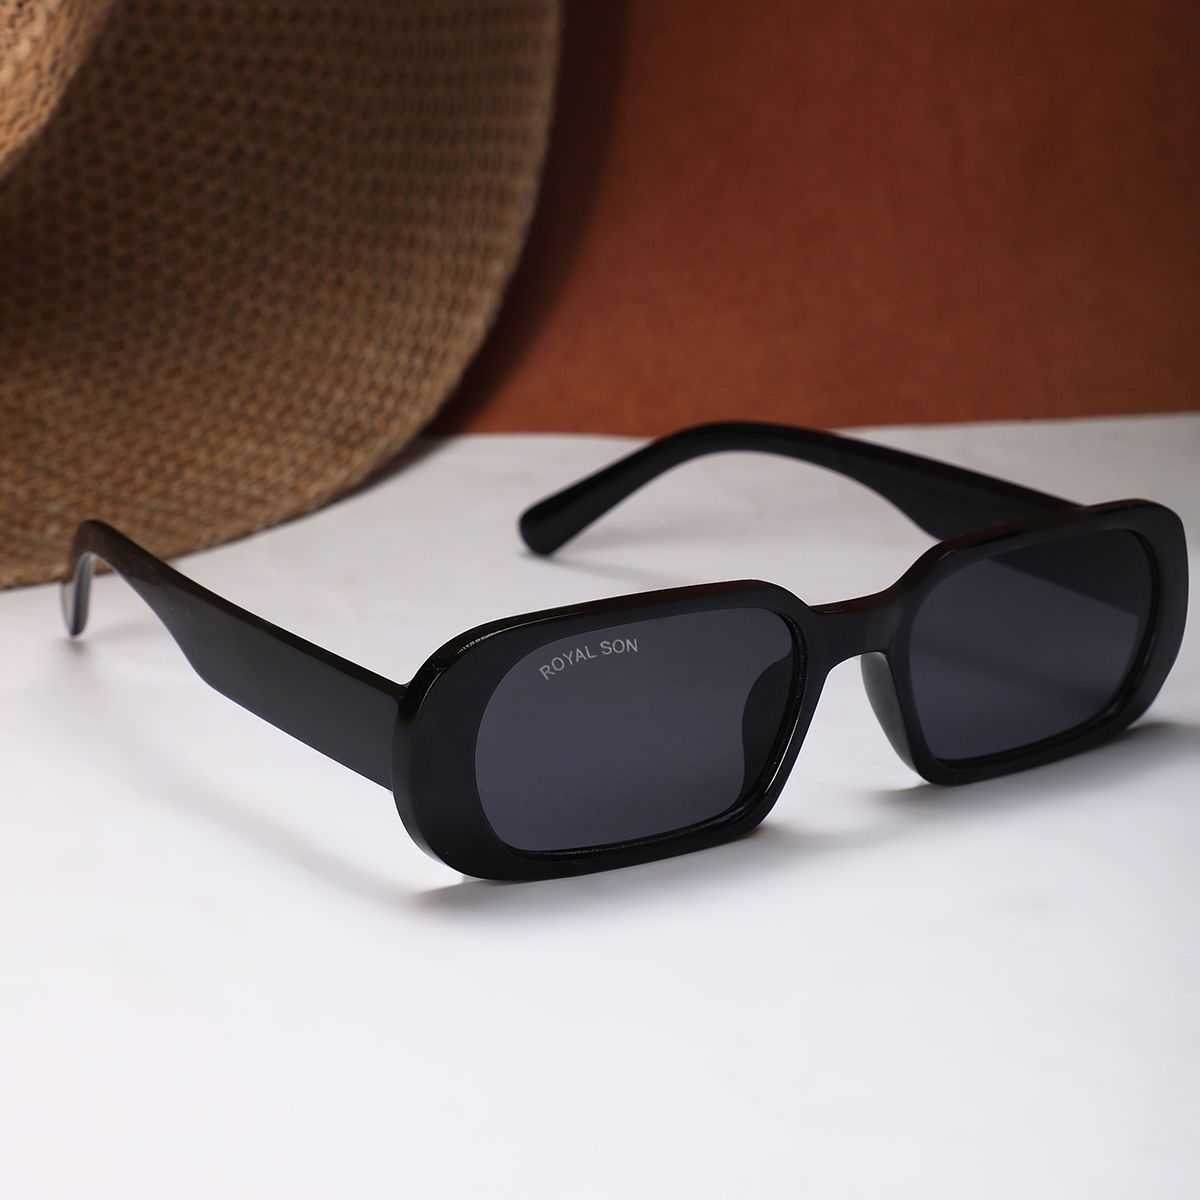 Women's retro sunglasses | Find the best looks | NA-KD